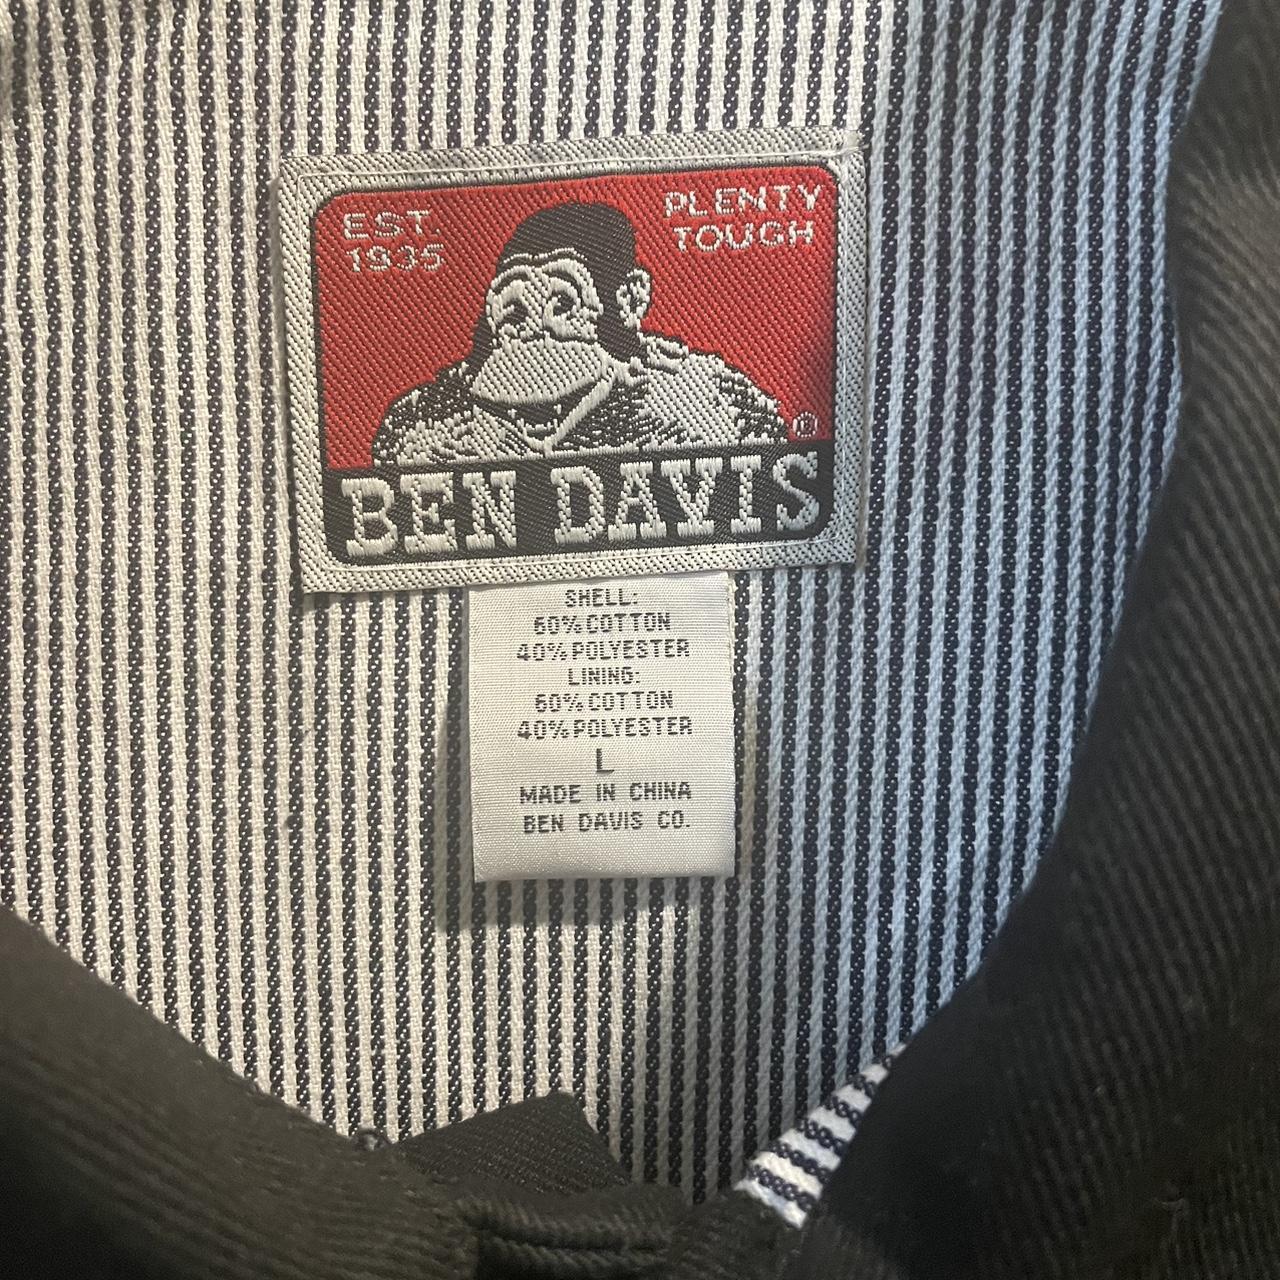 Ben Davis Co.